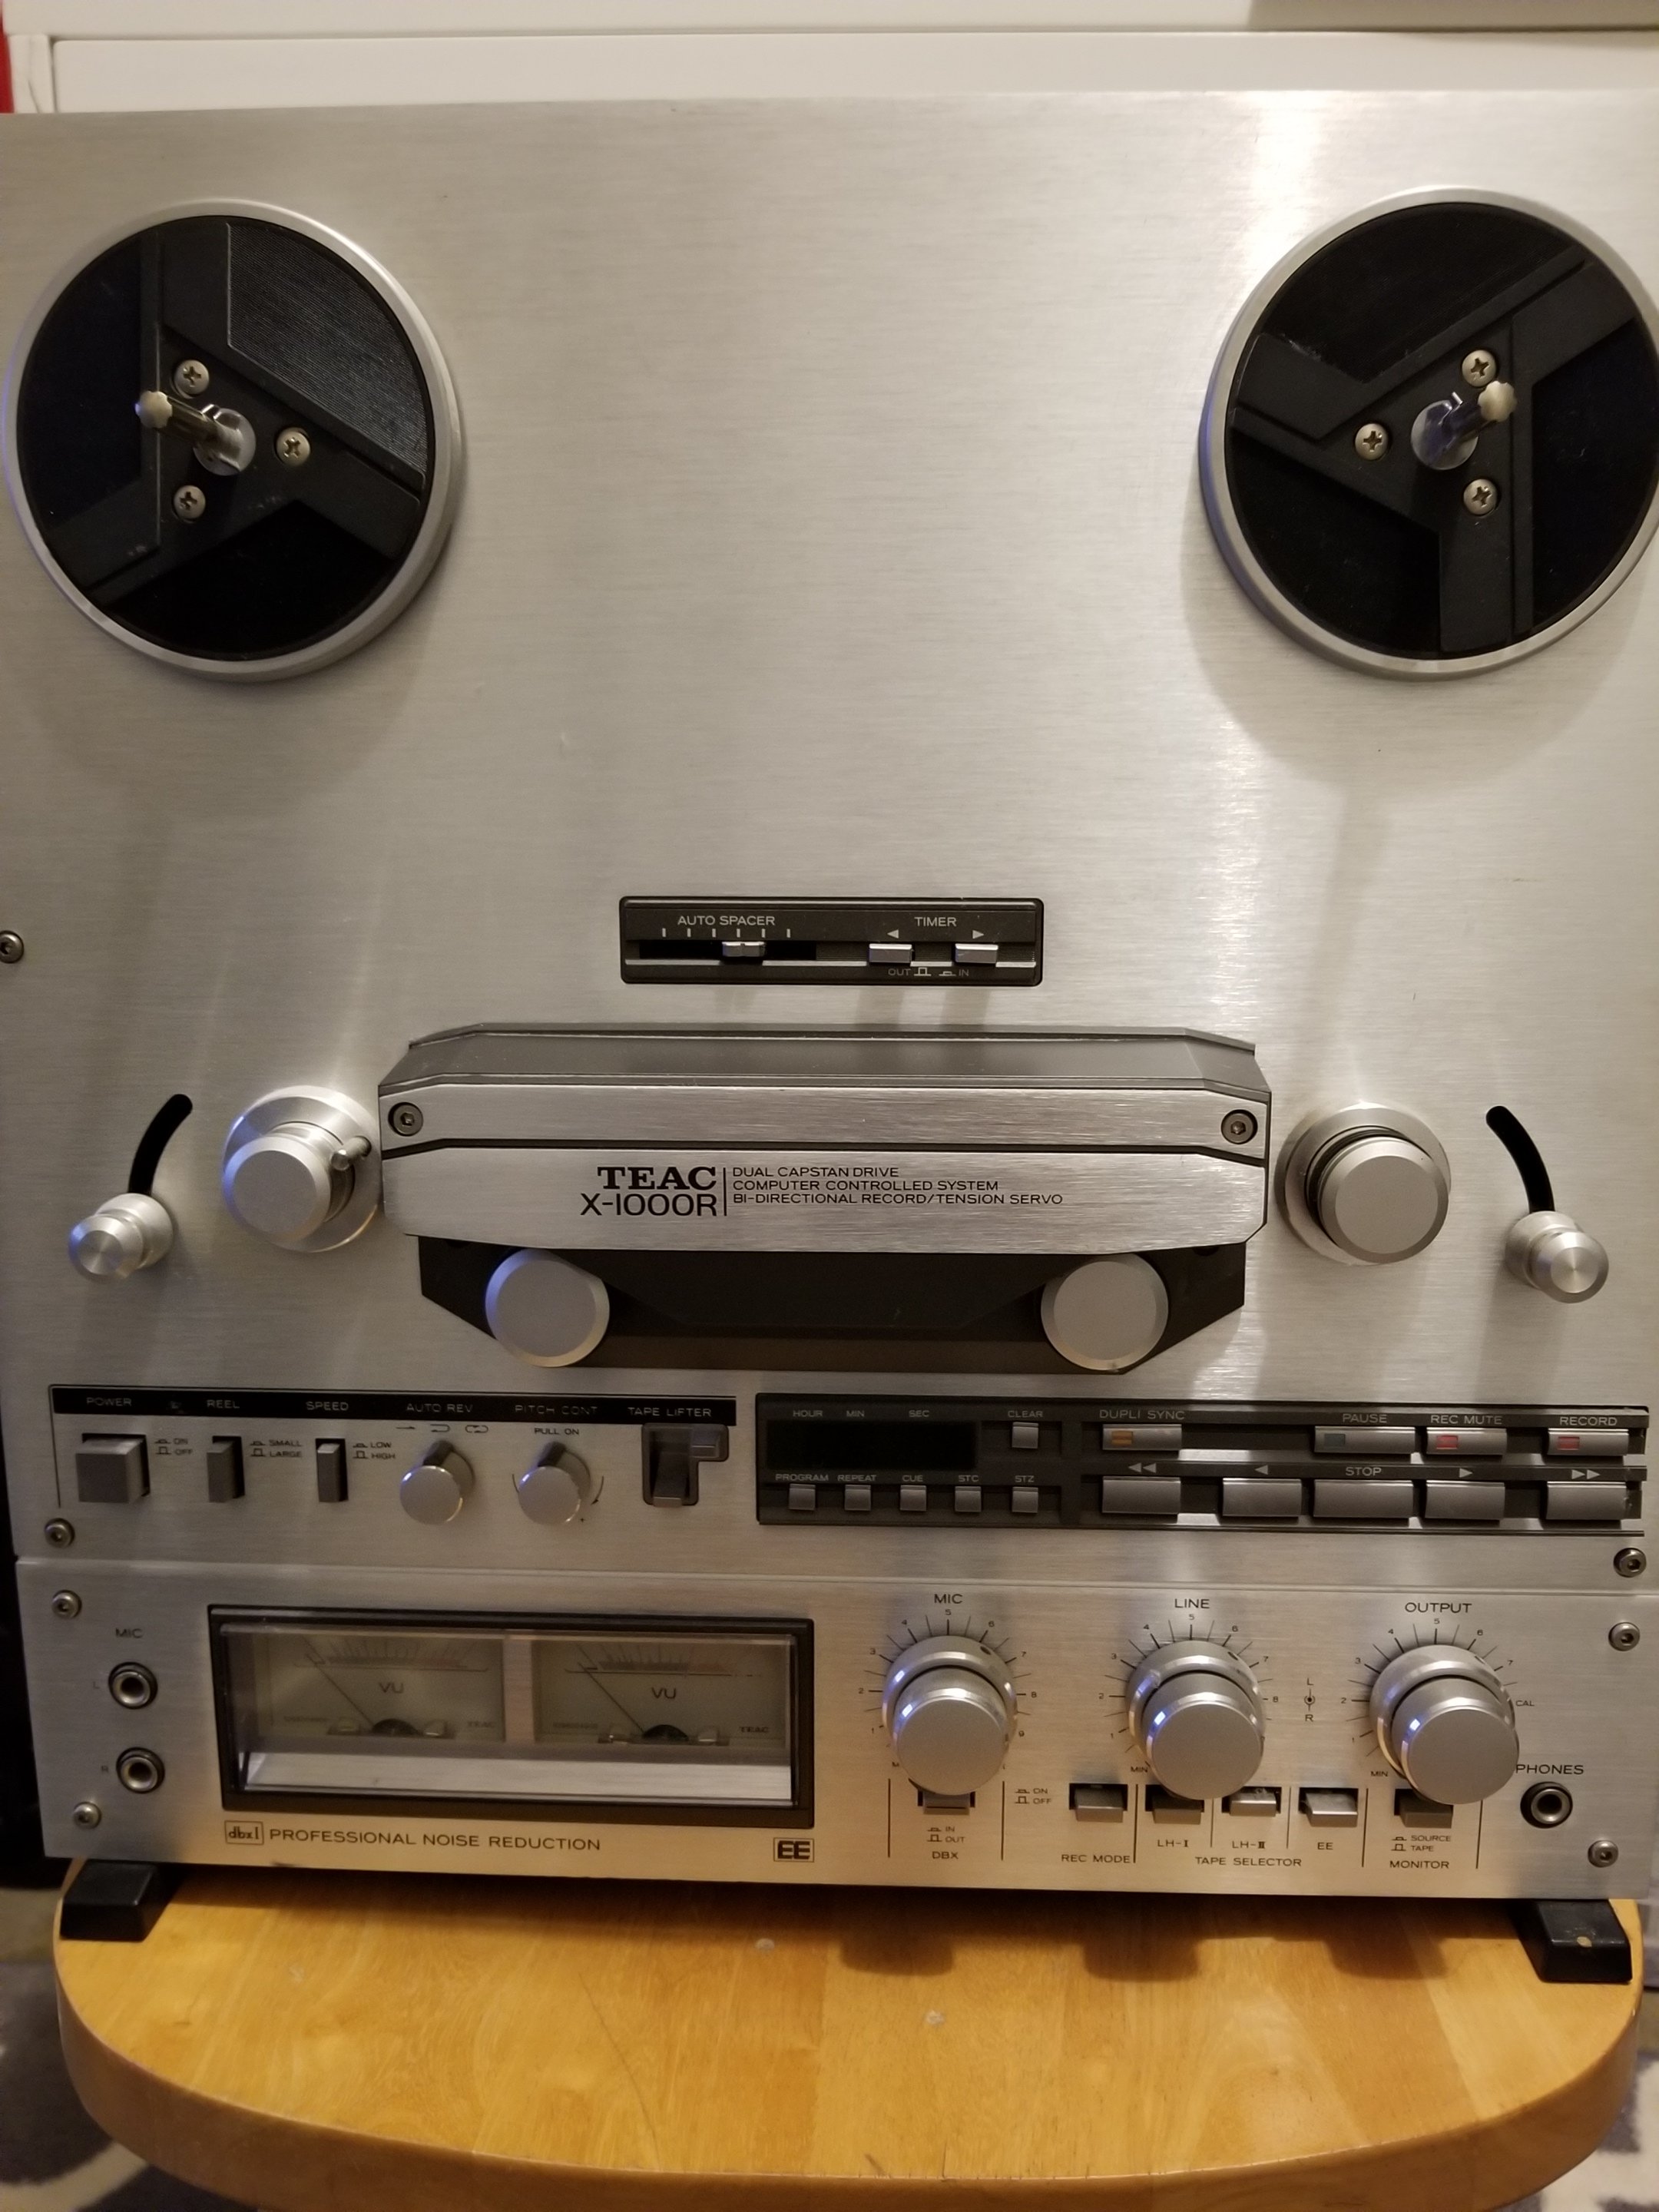 ArtStation - Tape recorder TEAC X-1000R